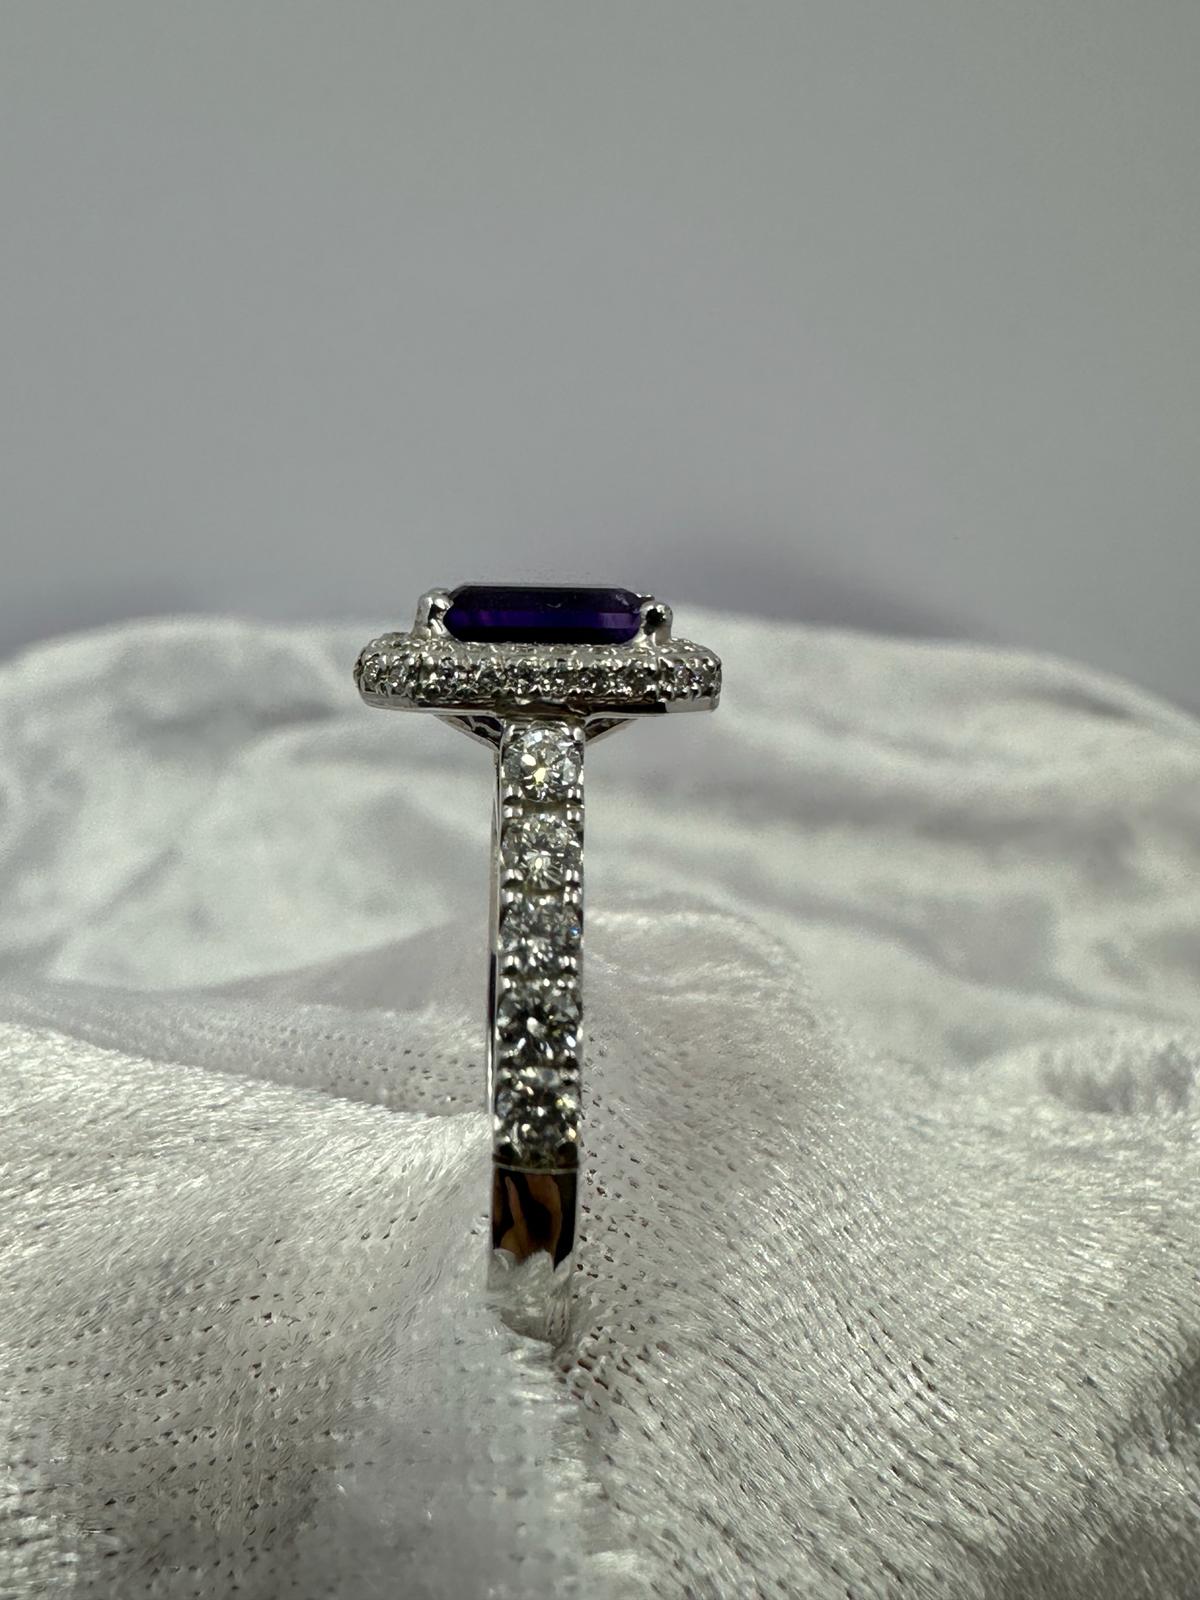 Stunning Diamond Amethyst dress/engagement ring